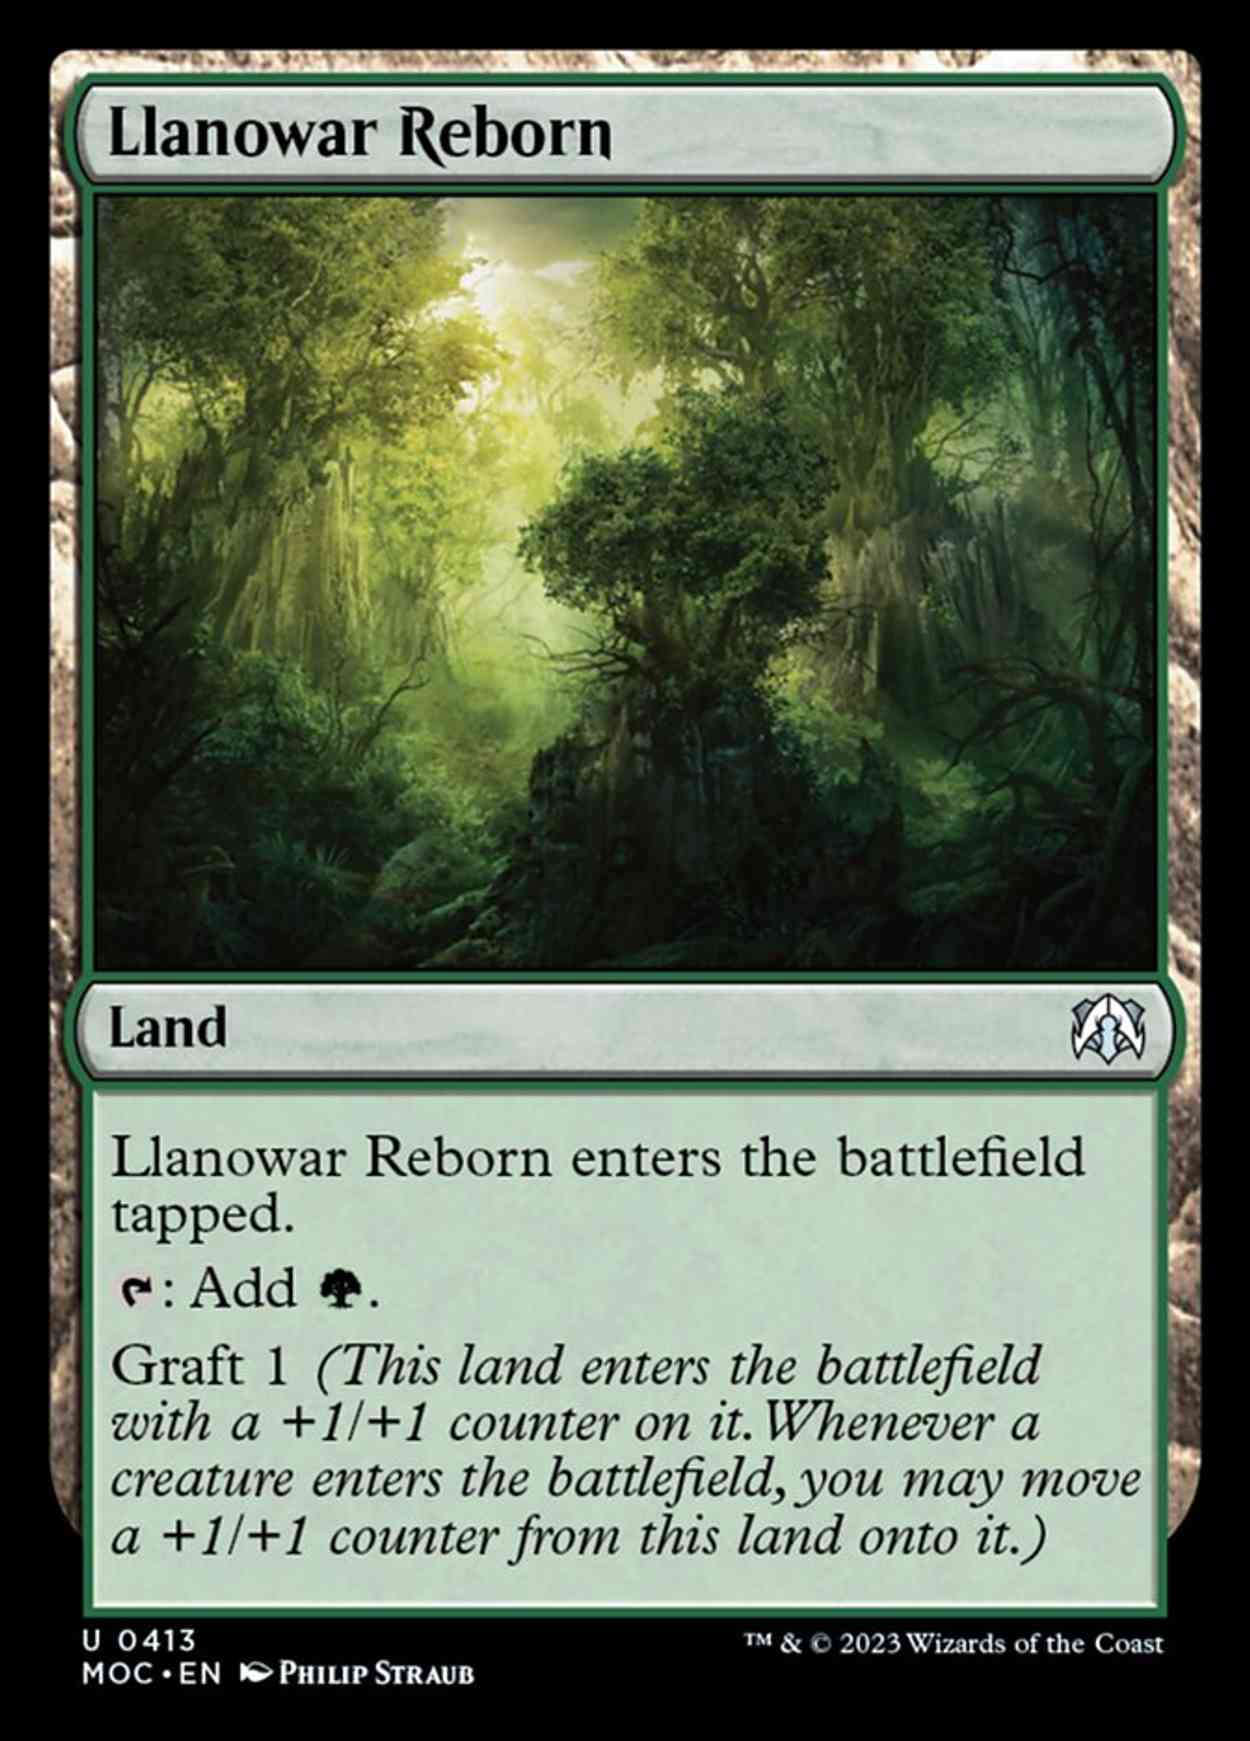 Llanowar Reborn magic card front